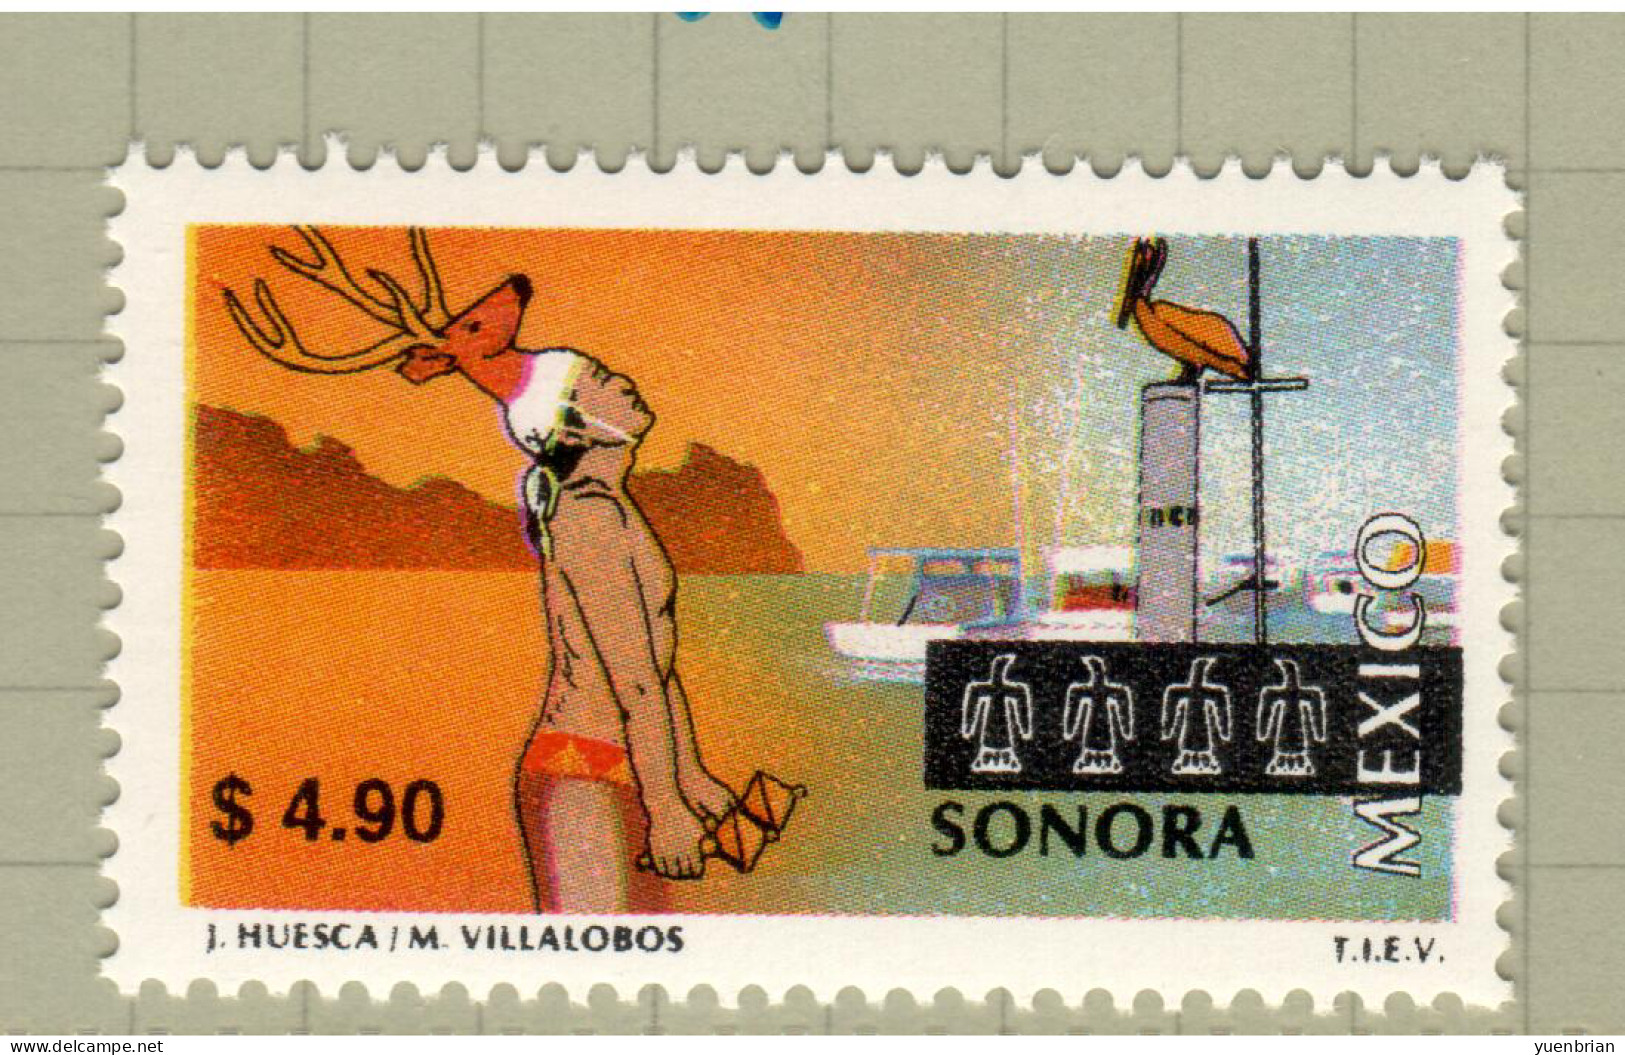 Mexico 1999, Bird, Birds, Pelican, $4.90, MNH** (Split From Set Of 28v) - Pellicani